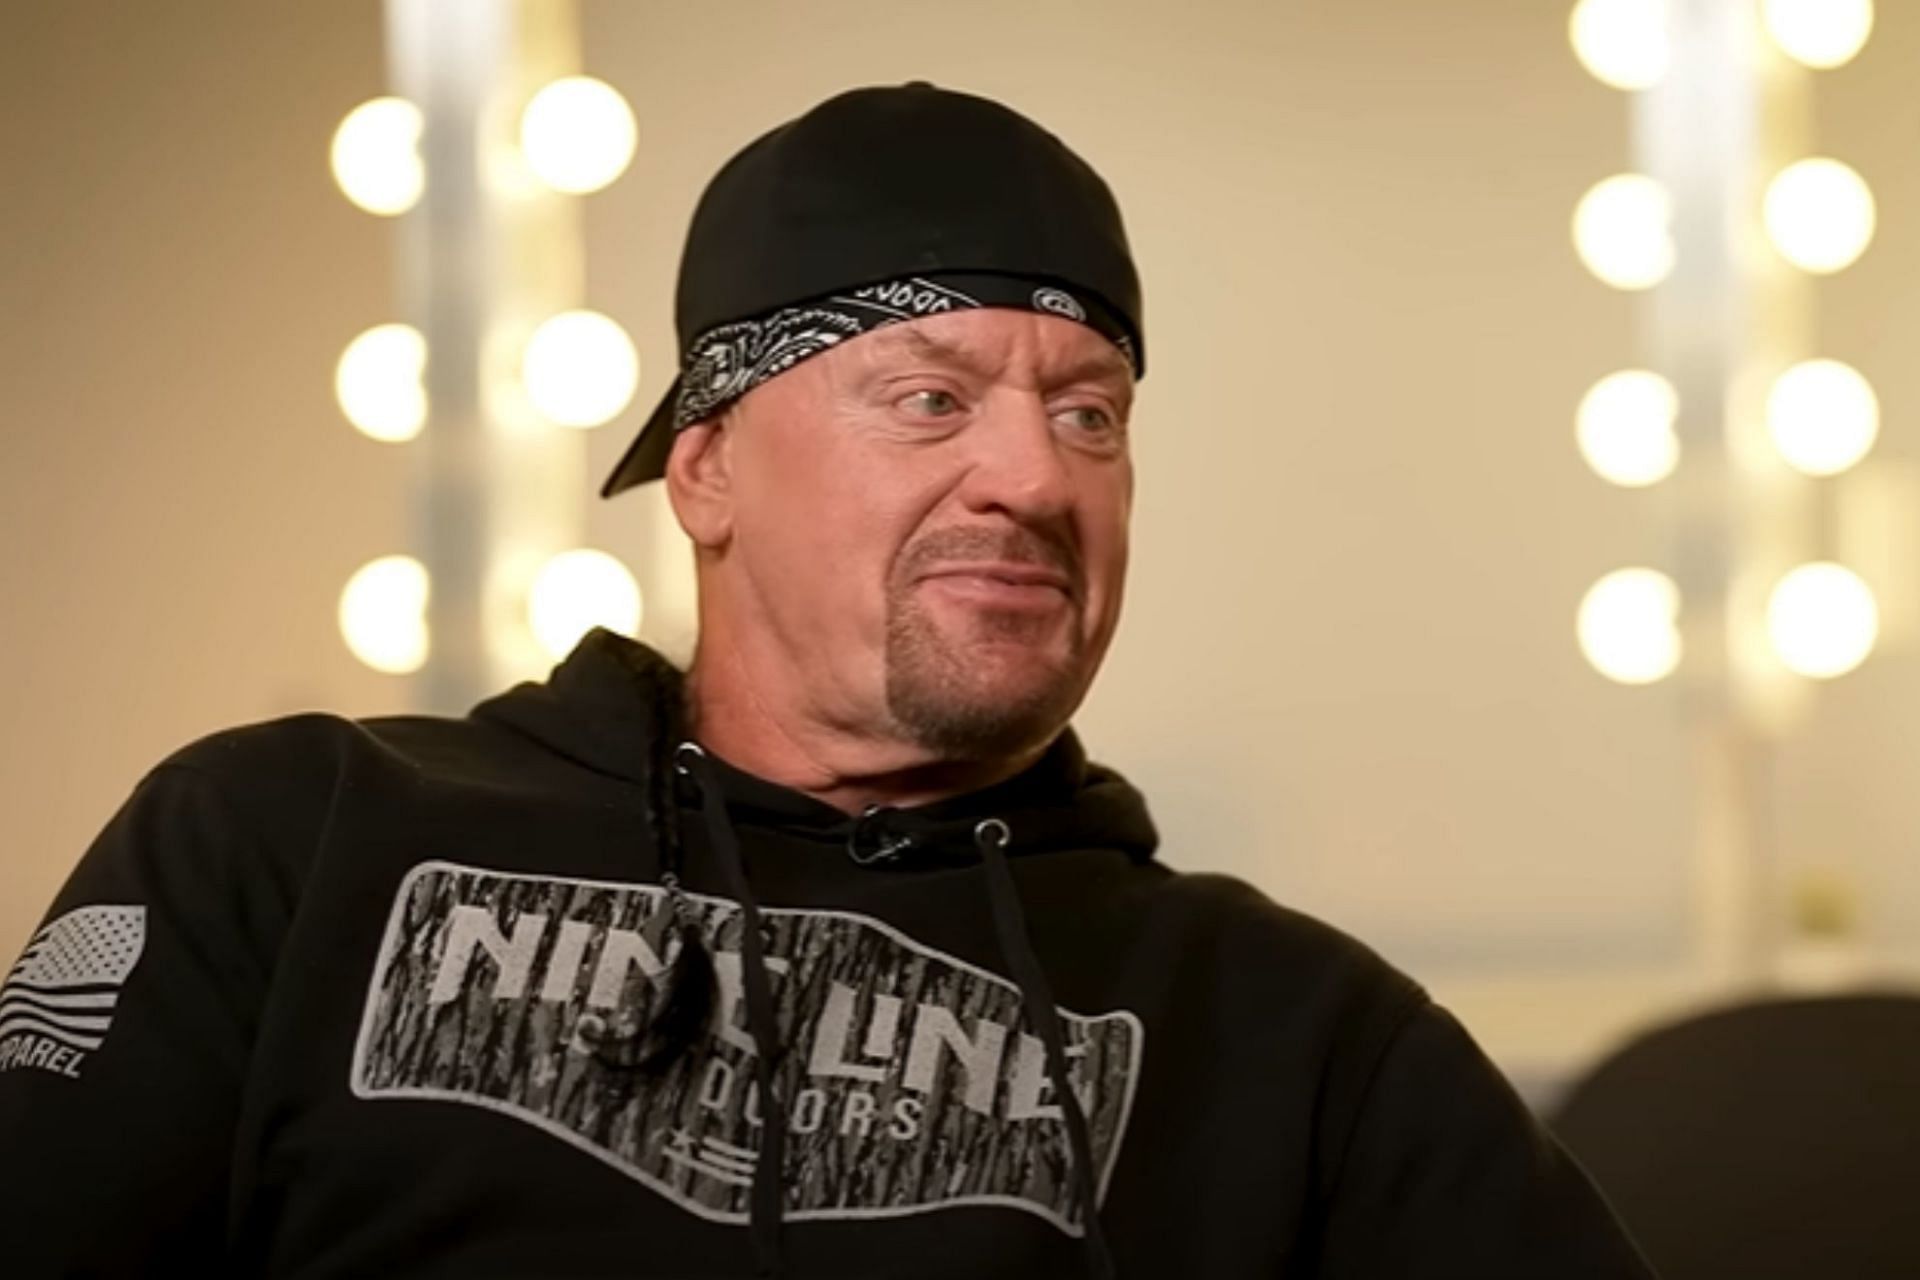 The Undertaker has retired from wrestling